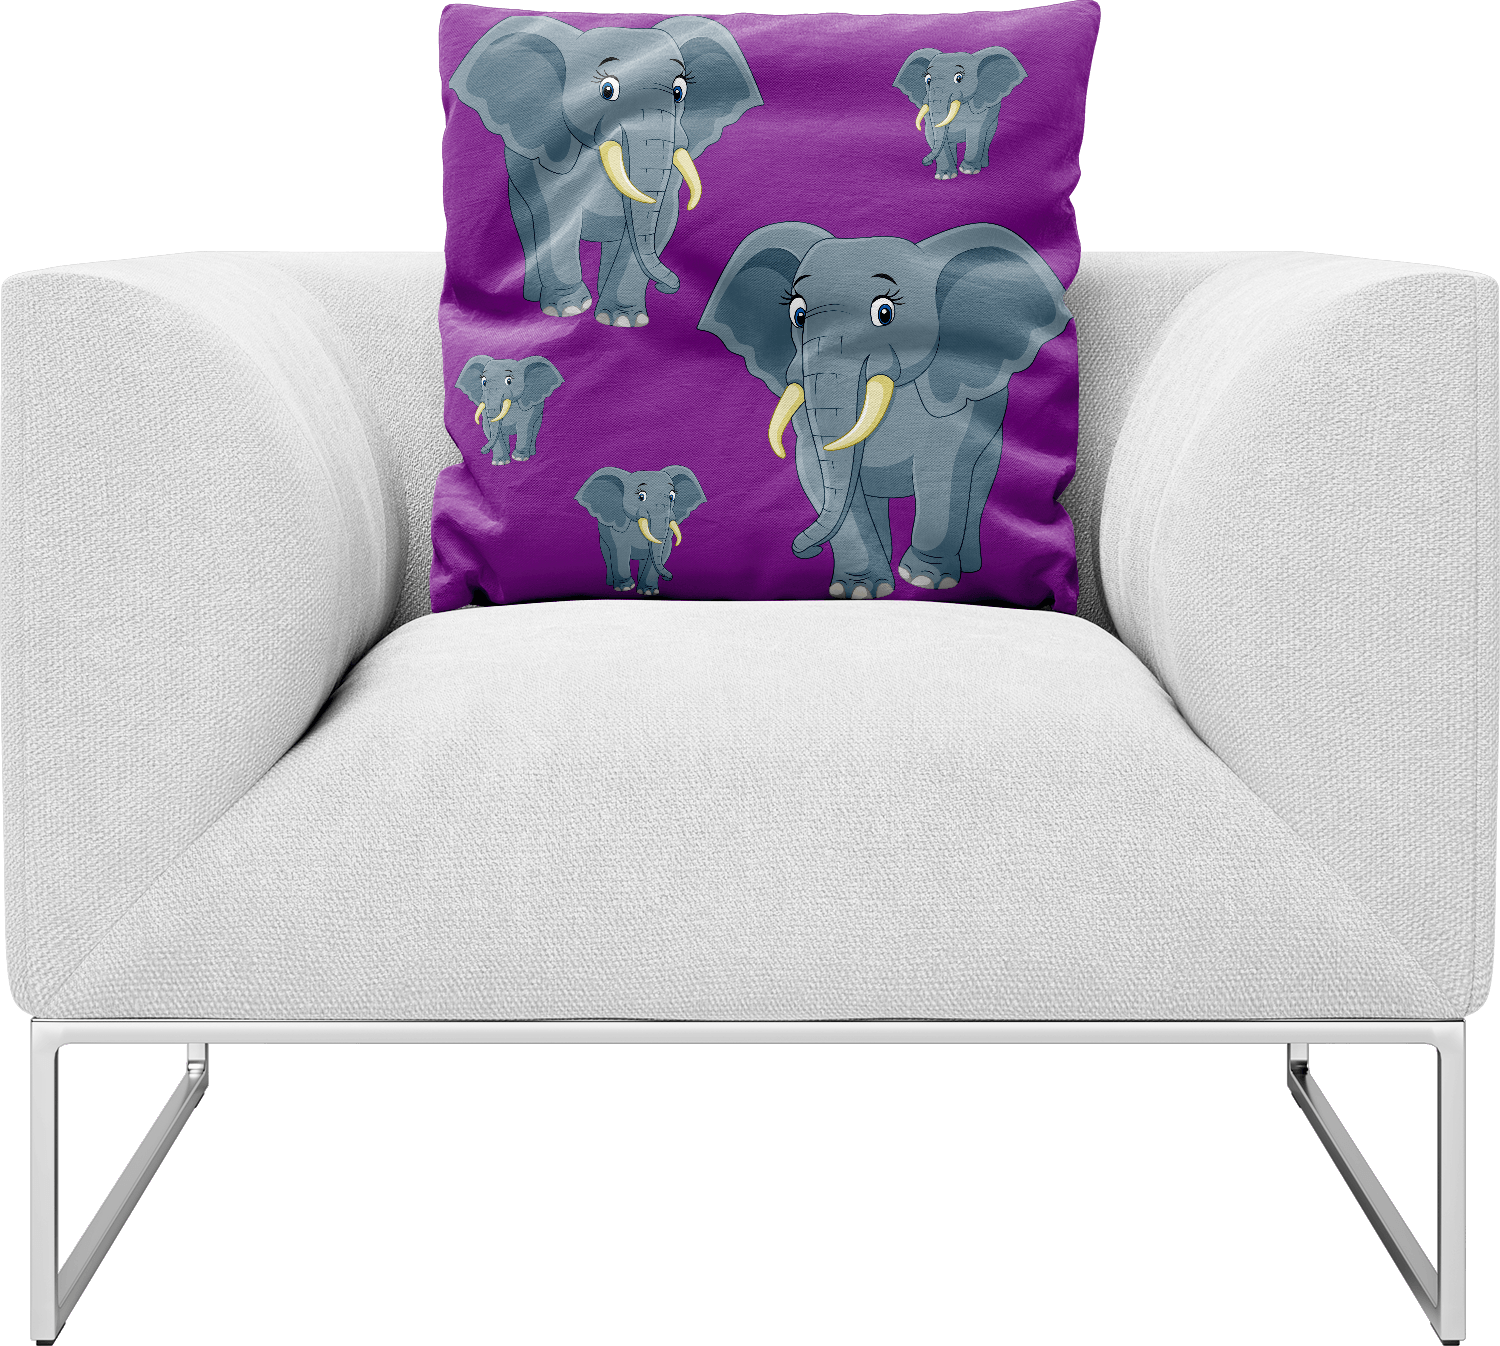 Ellie Elephant Pillows Cushions - fungear.com.au